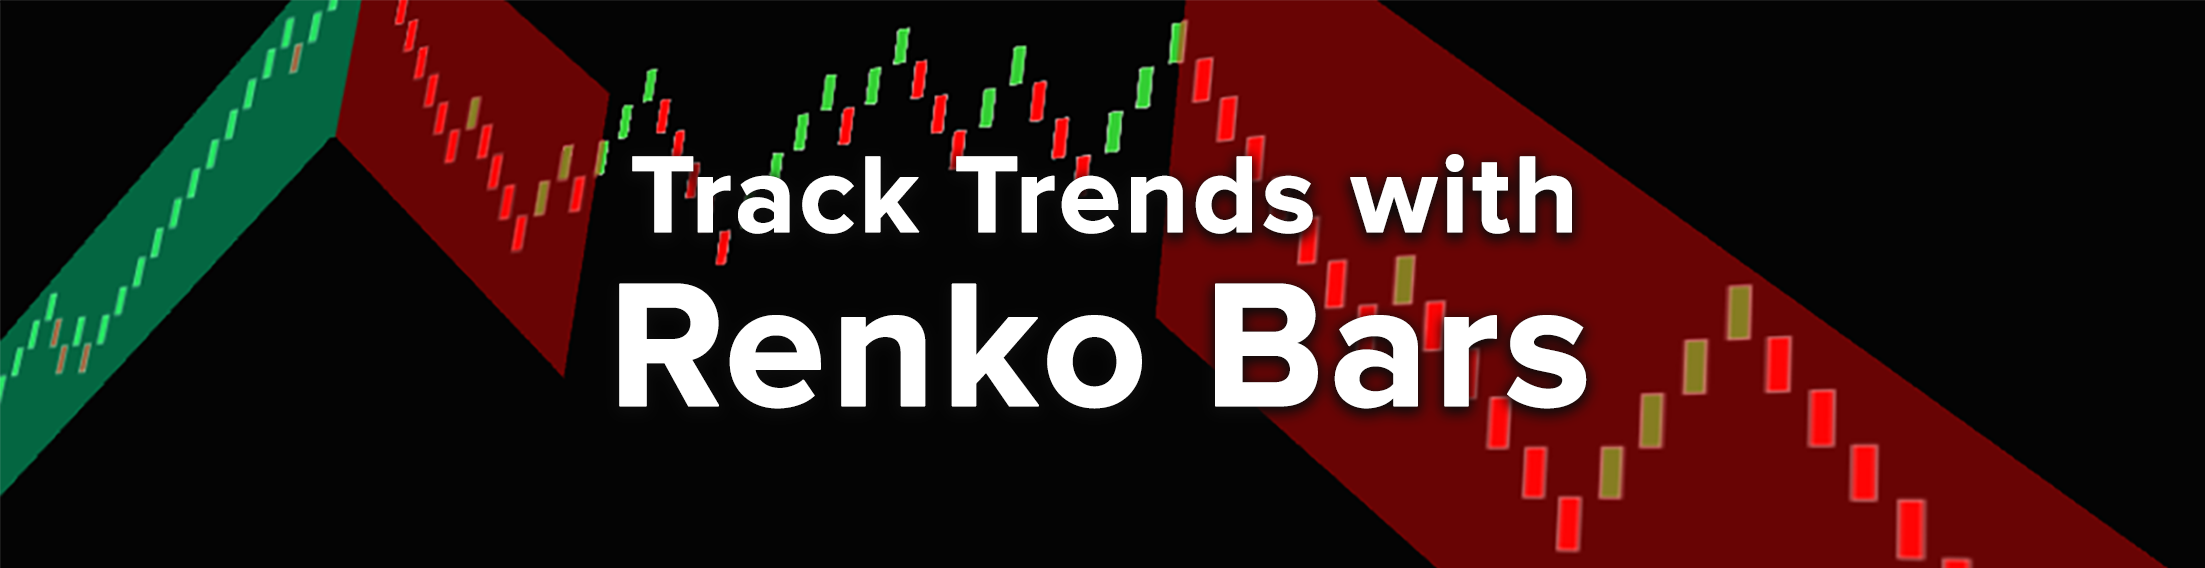 Renko bars trading